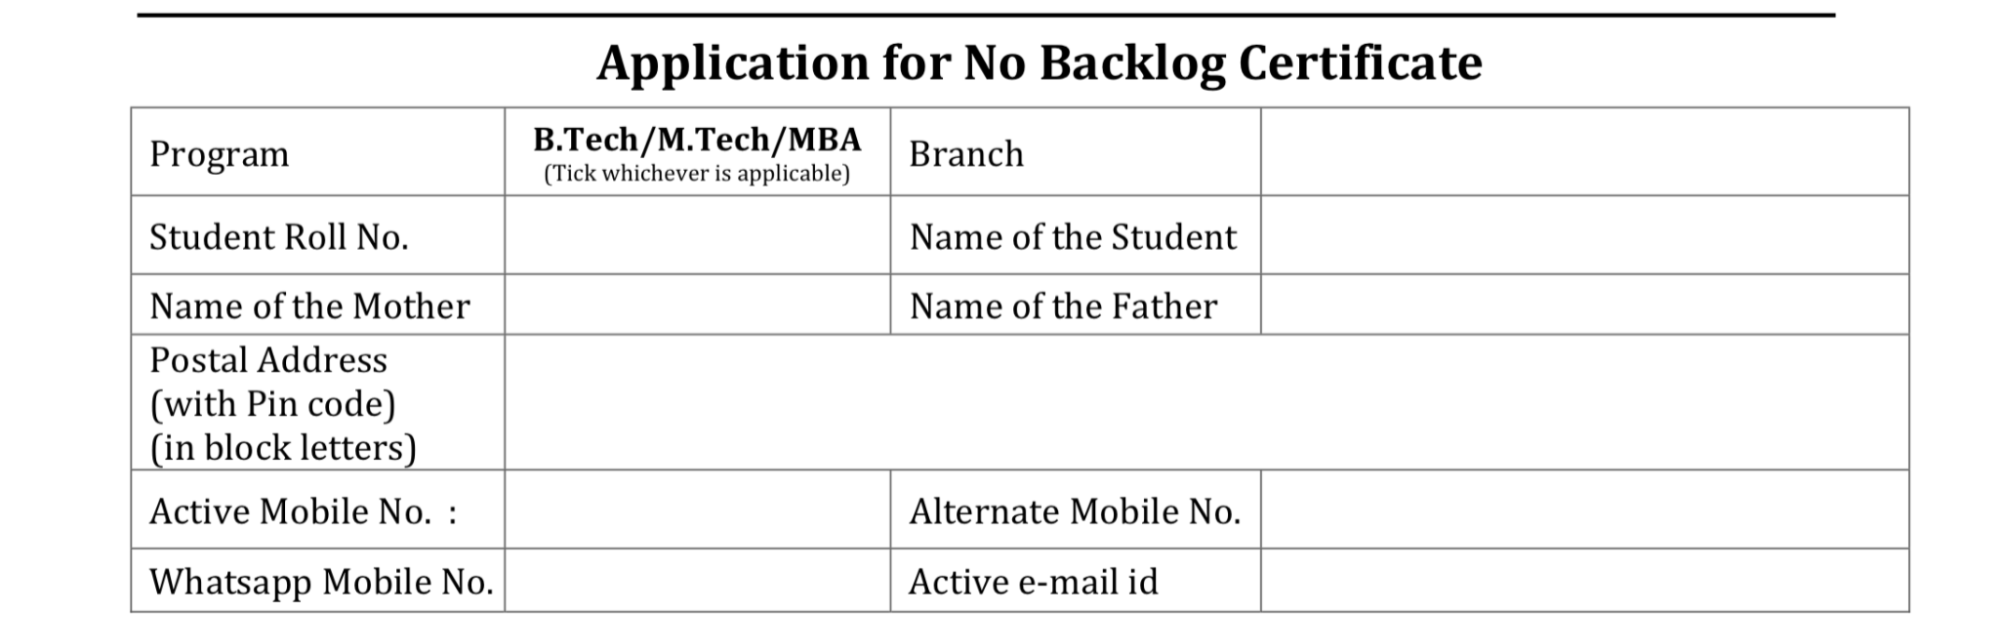 Procedure to Obtain Backlog Certificate